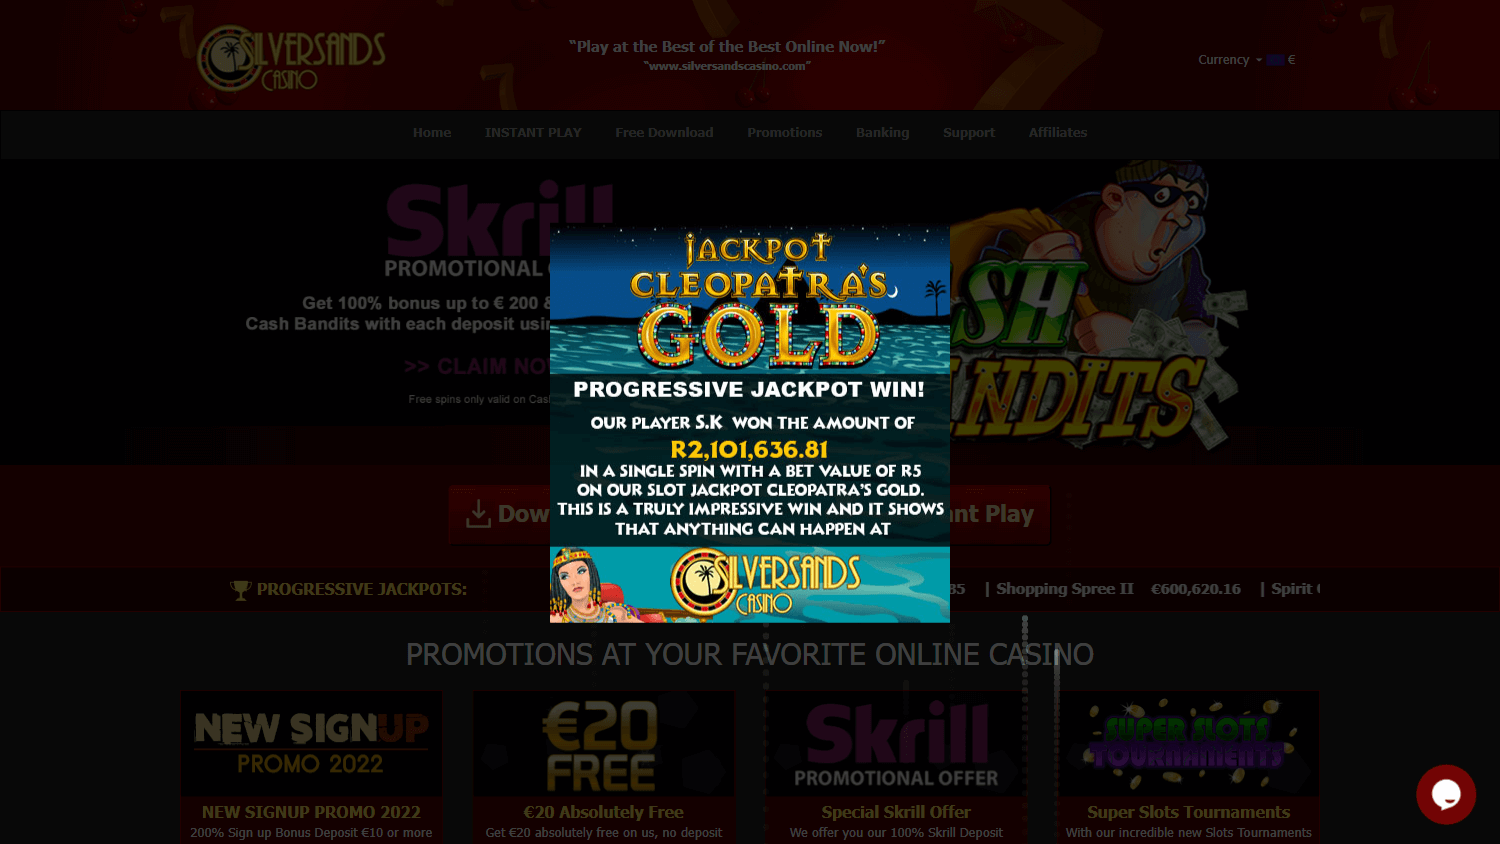 silversands_casino_homepage_desktop